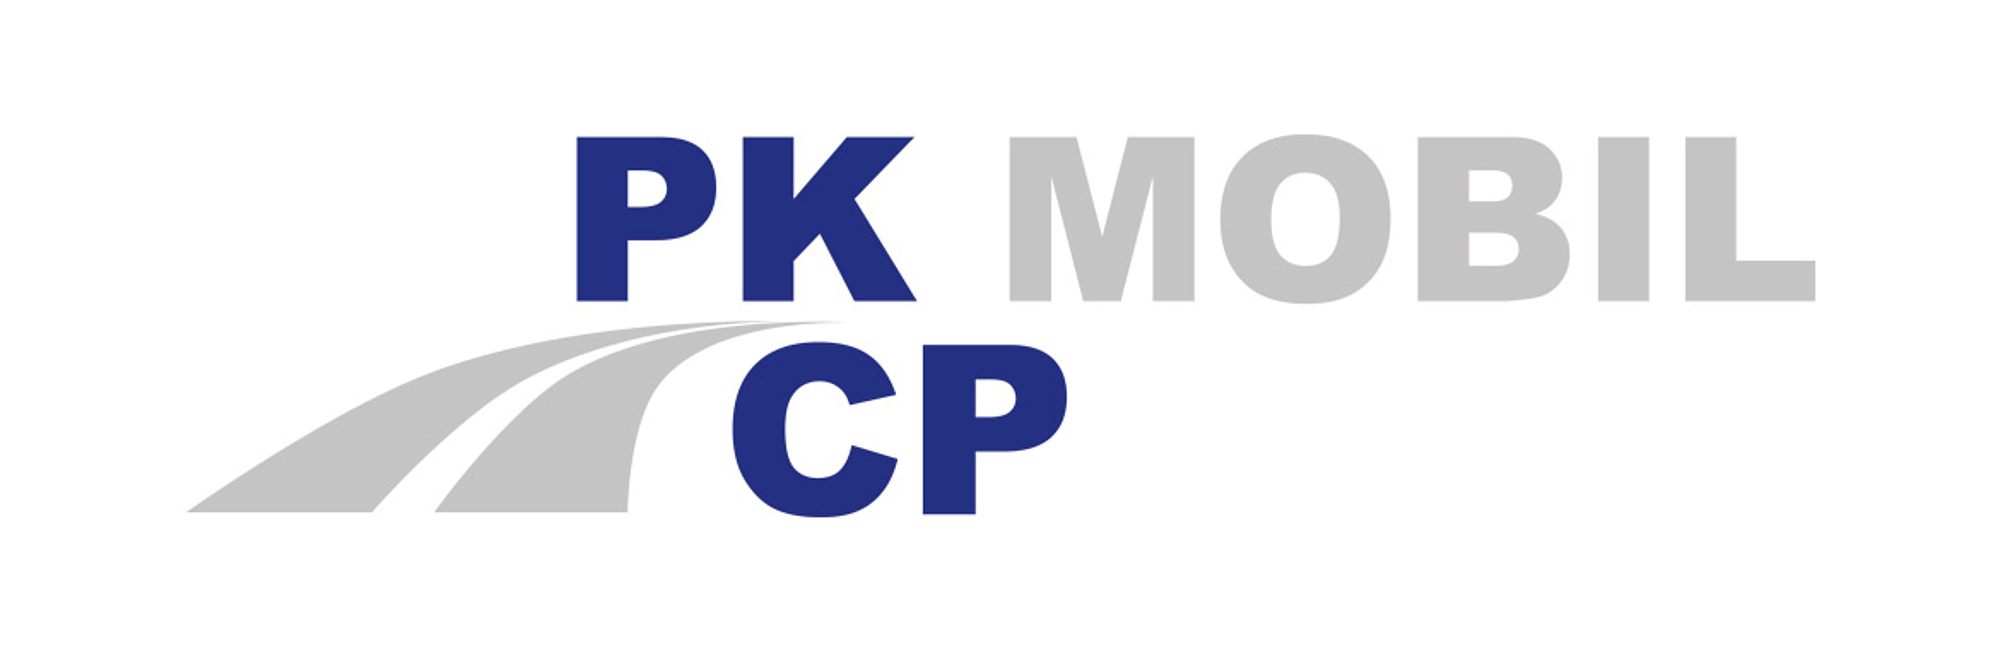 logo pkmobil